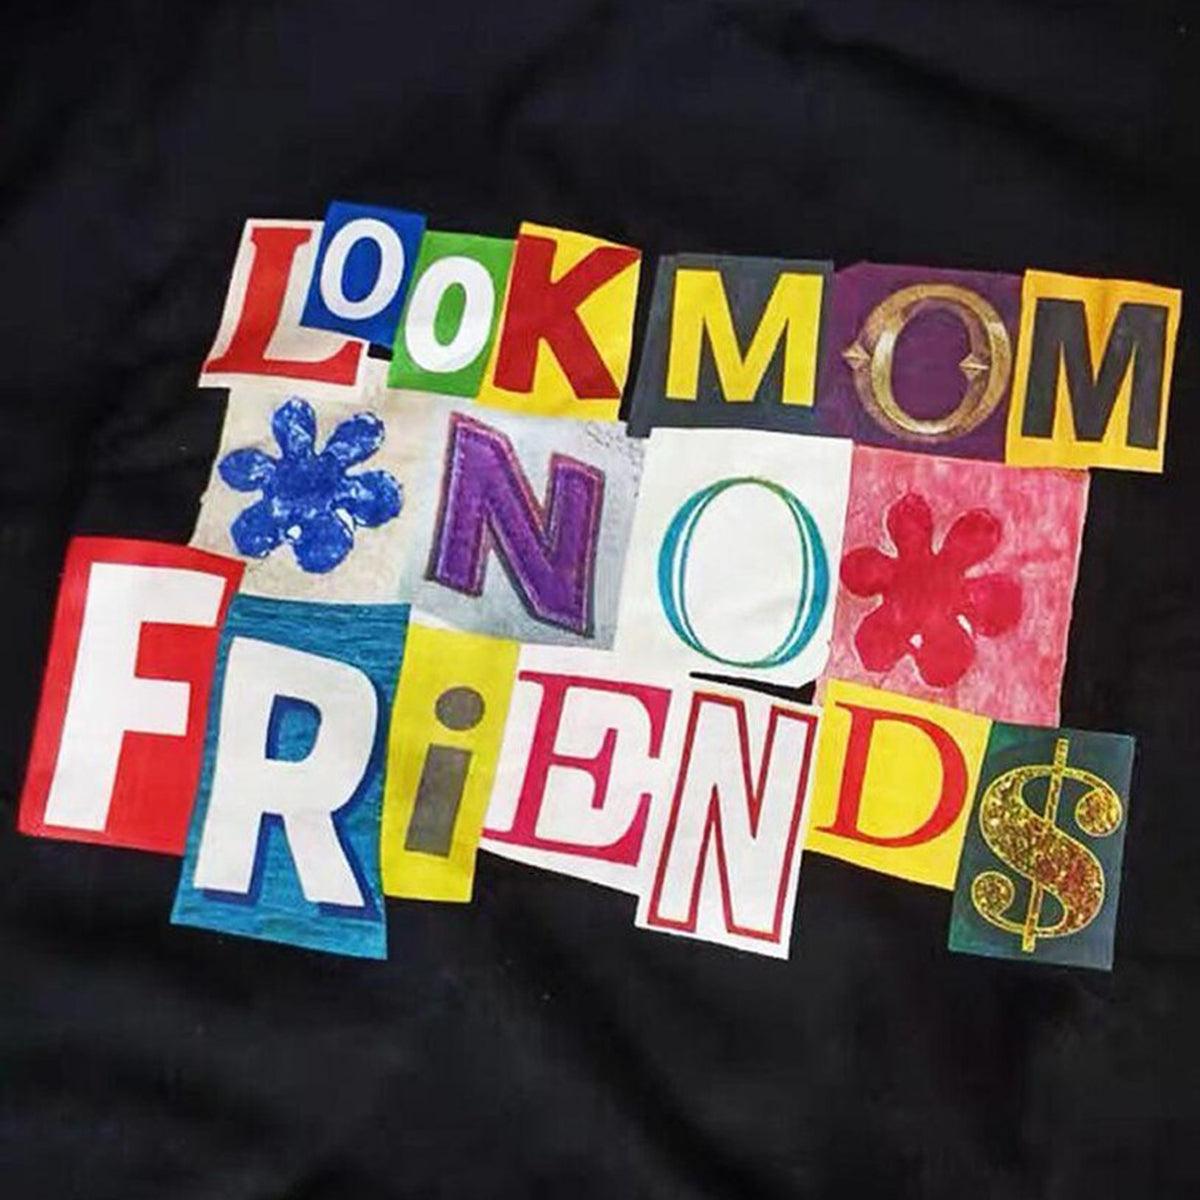 Look Mom No Friends T-Shirt